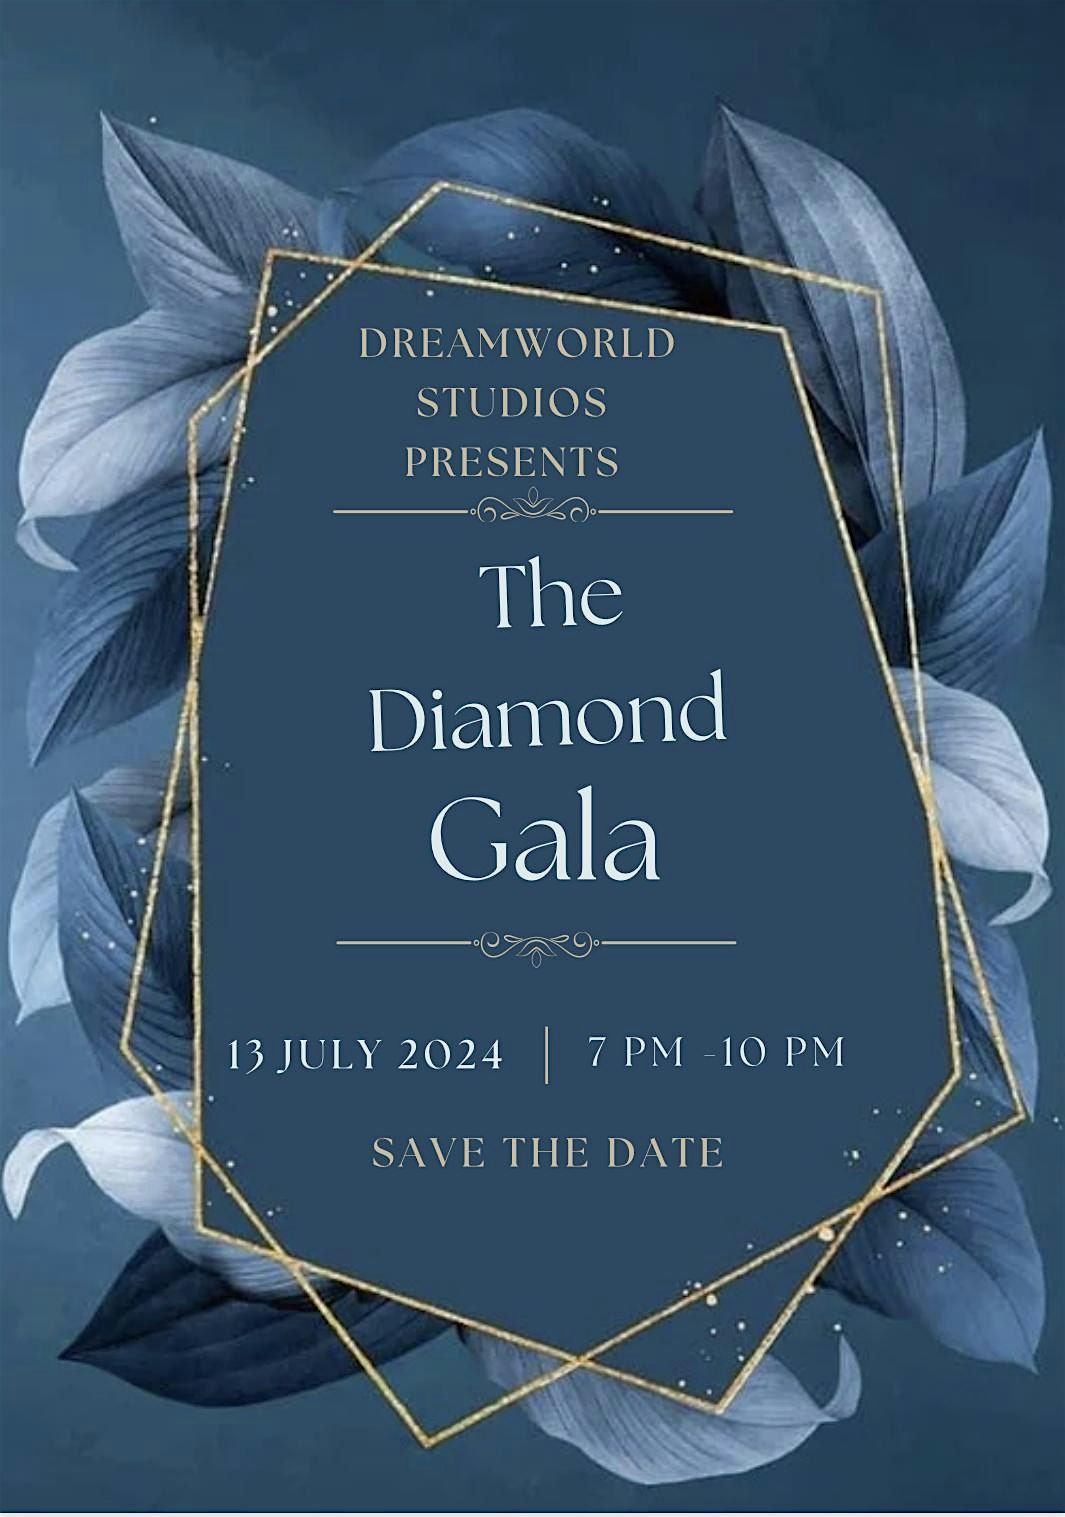 The Diamond Gala